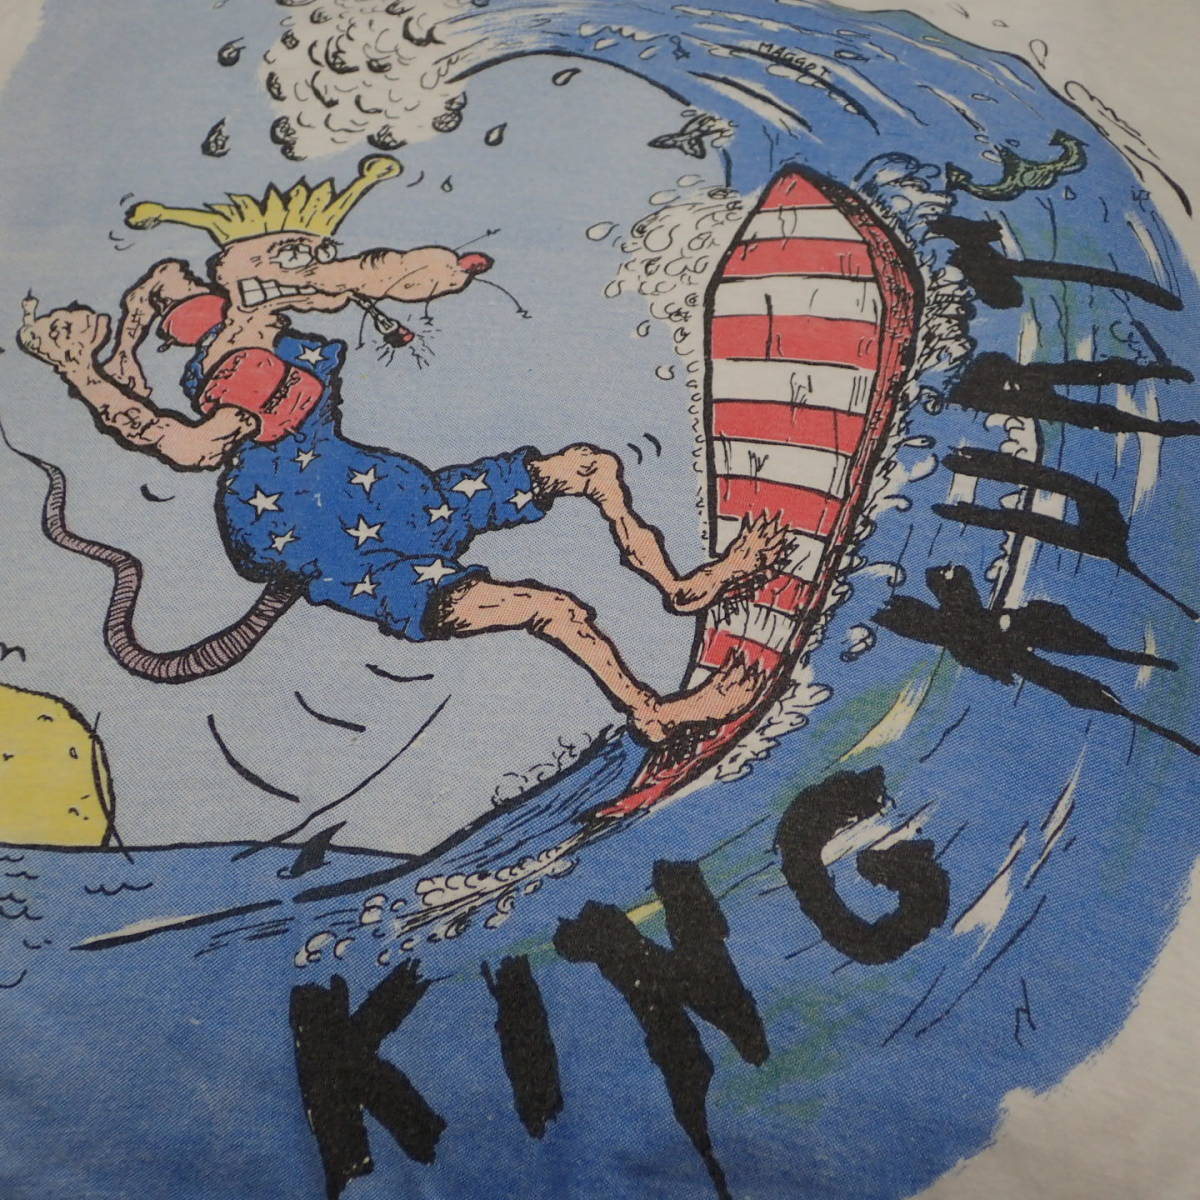 □ 80s KING KURT Vintage T-shirt □ キングカート ヴィンテージ T